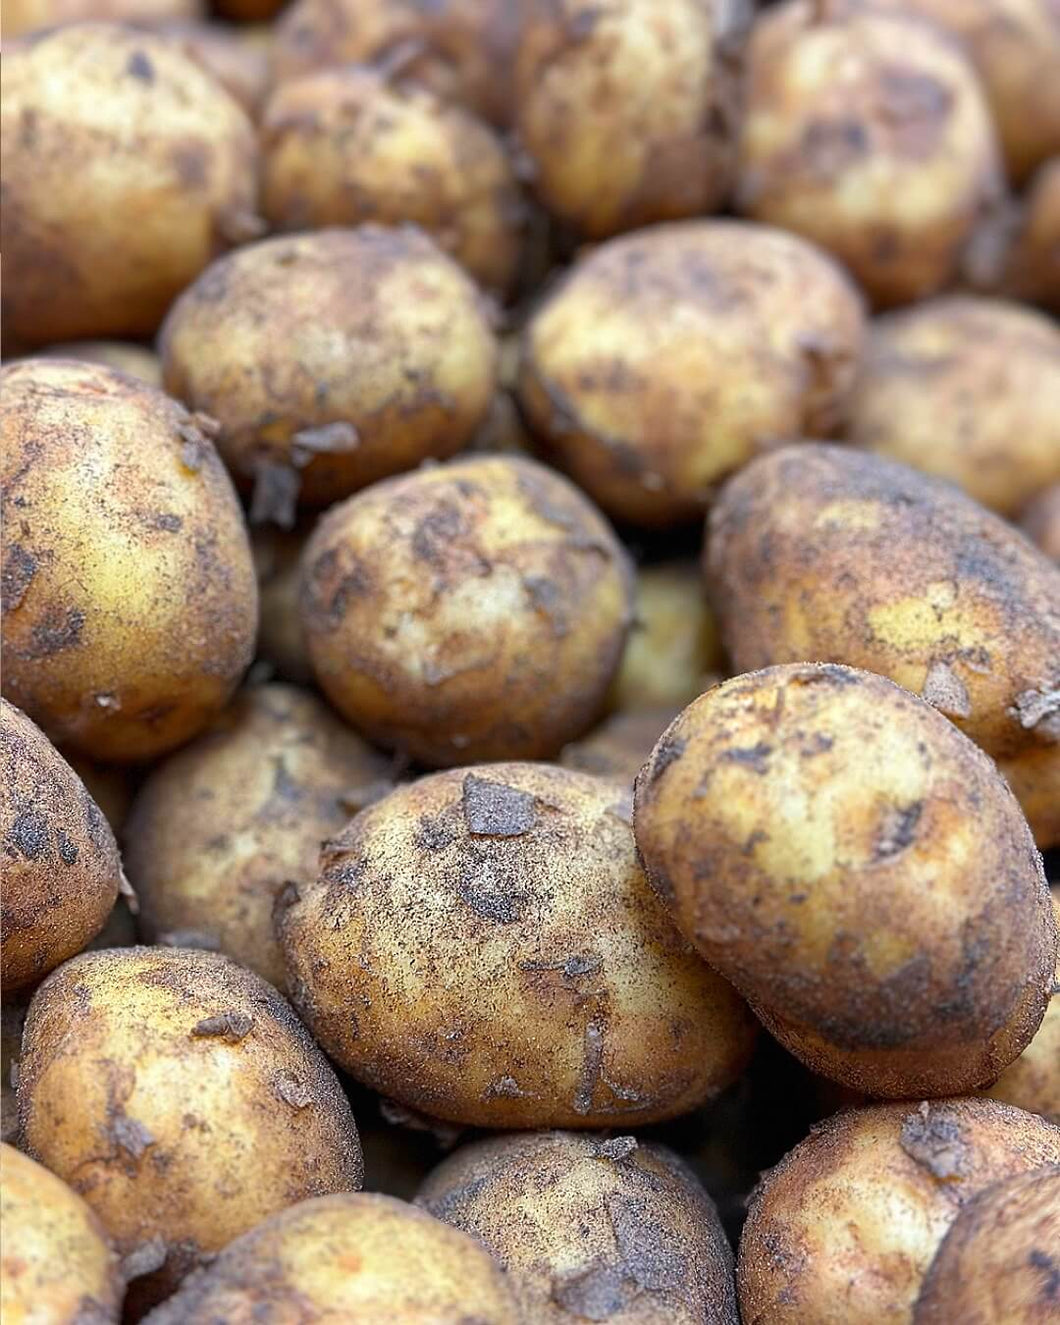 Dirty New Potatoes